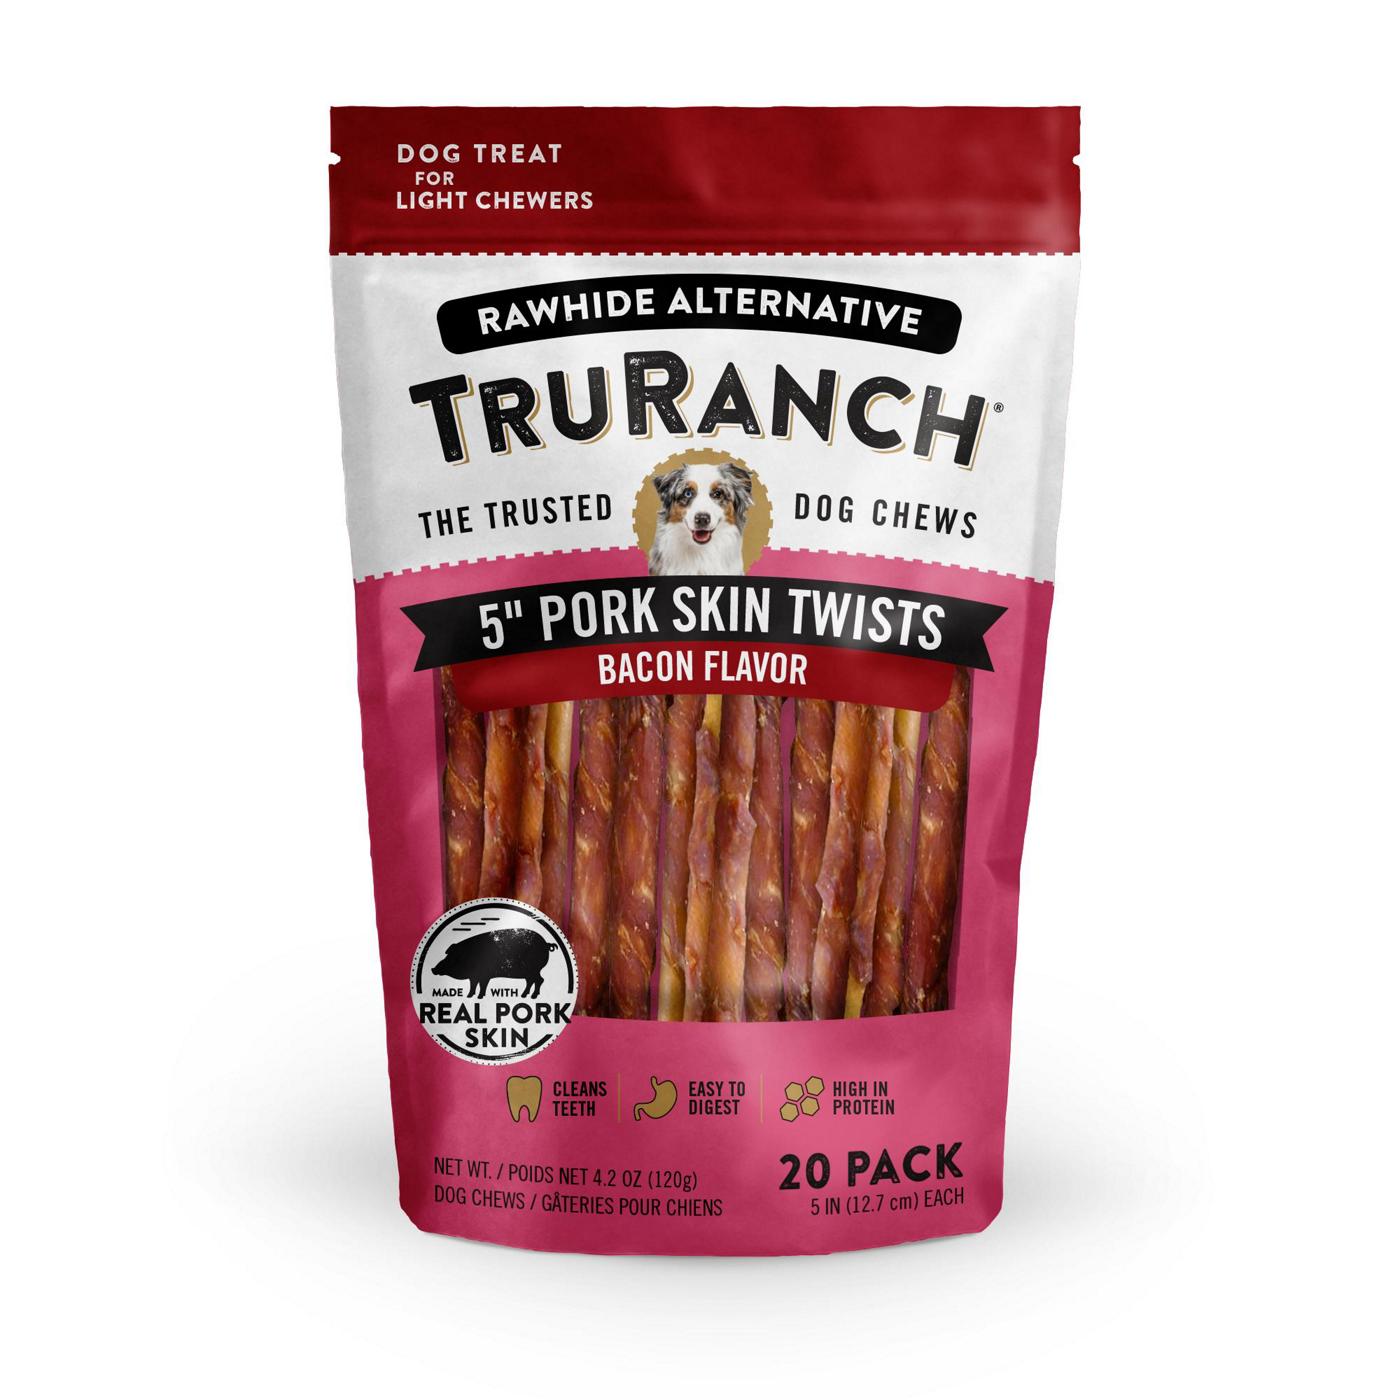 TruRanch 5 Inch Pork Skin Twists Bacon Flavor Dog Chews; image 1 of 2